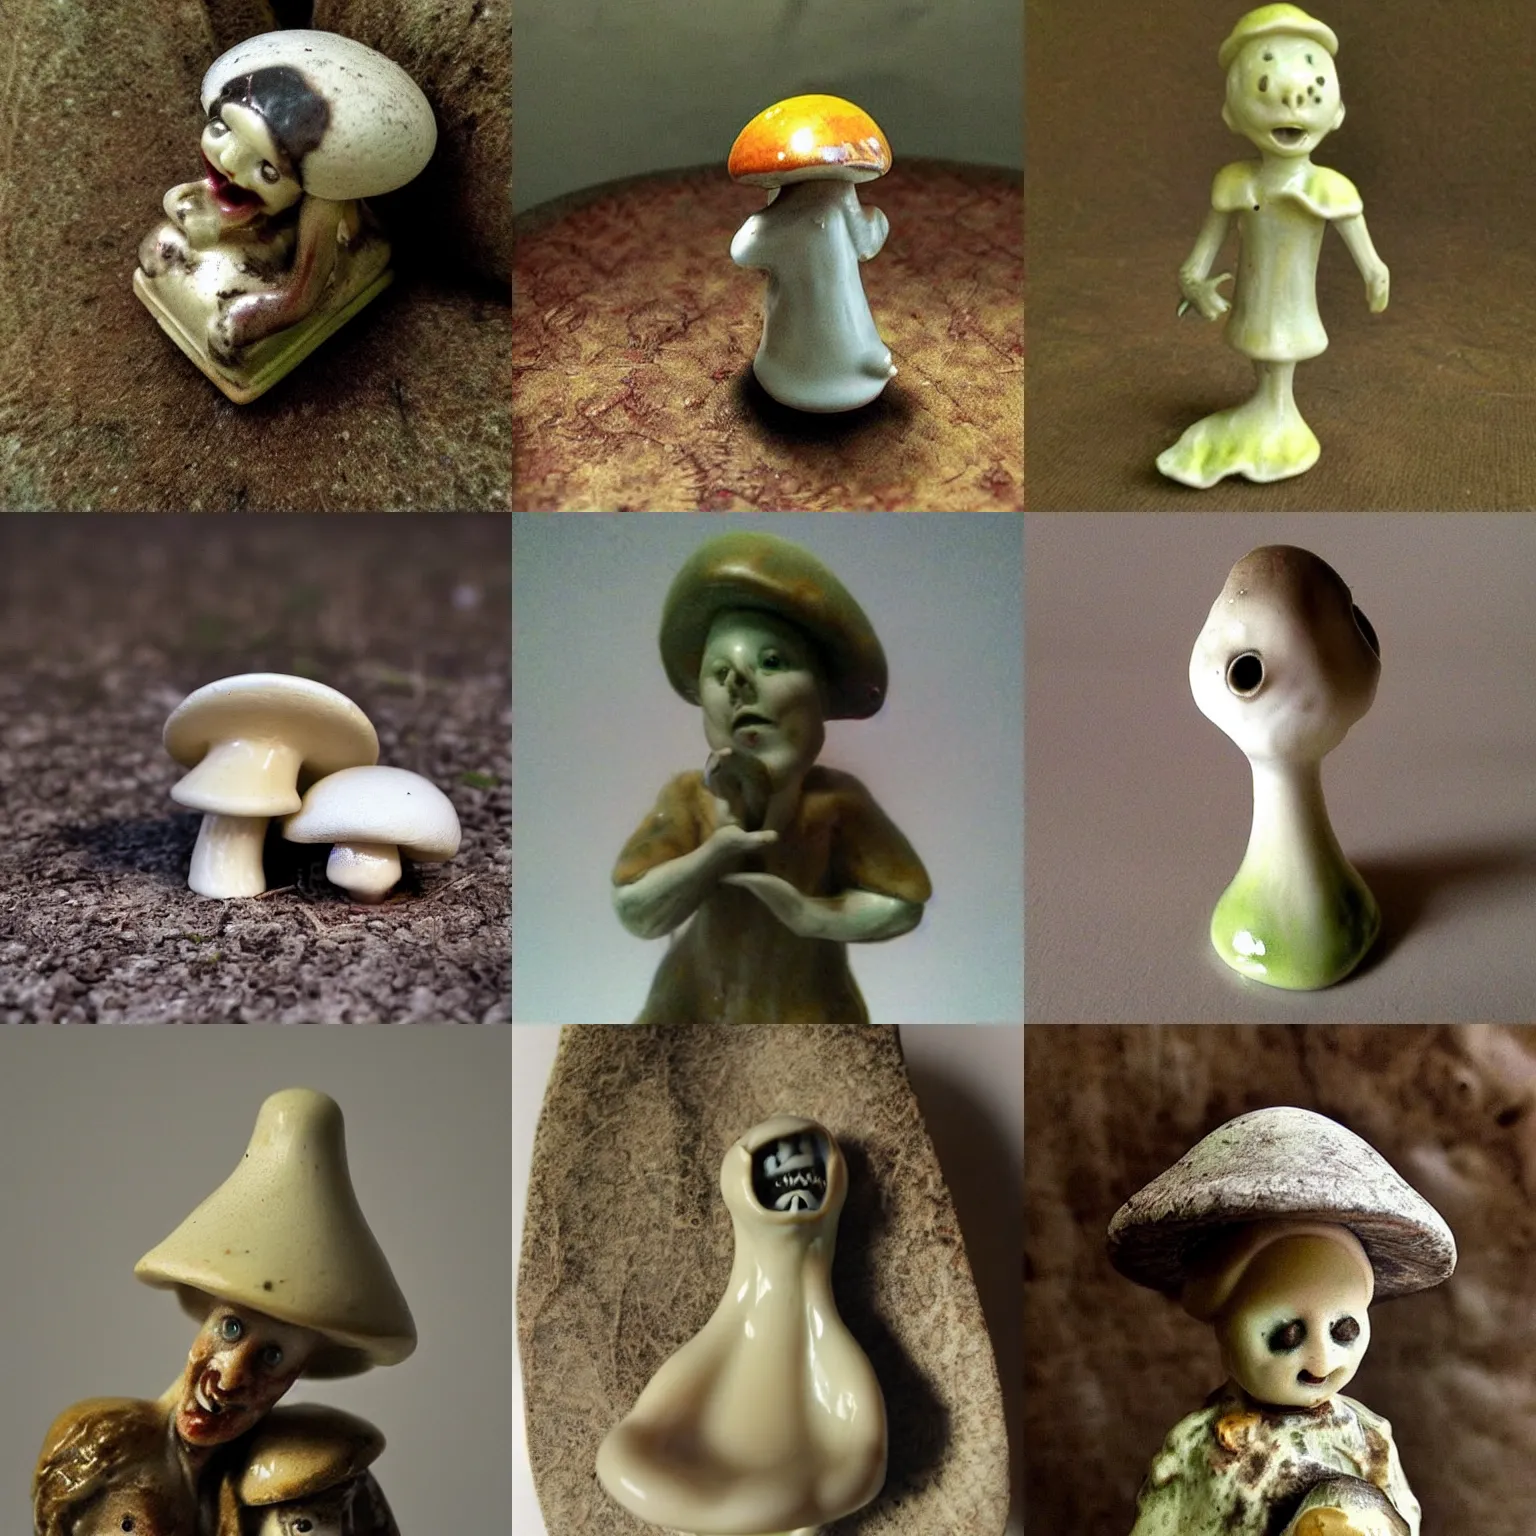 Prompt: screaming mushroom!!! antique ceramic figurine, haunted cursed image, eerie horror, unsettling disturbing creepy macro photo, bad quality